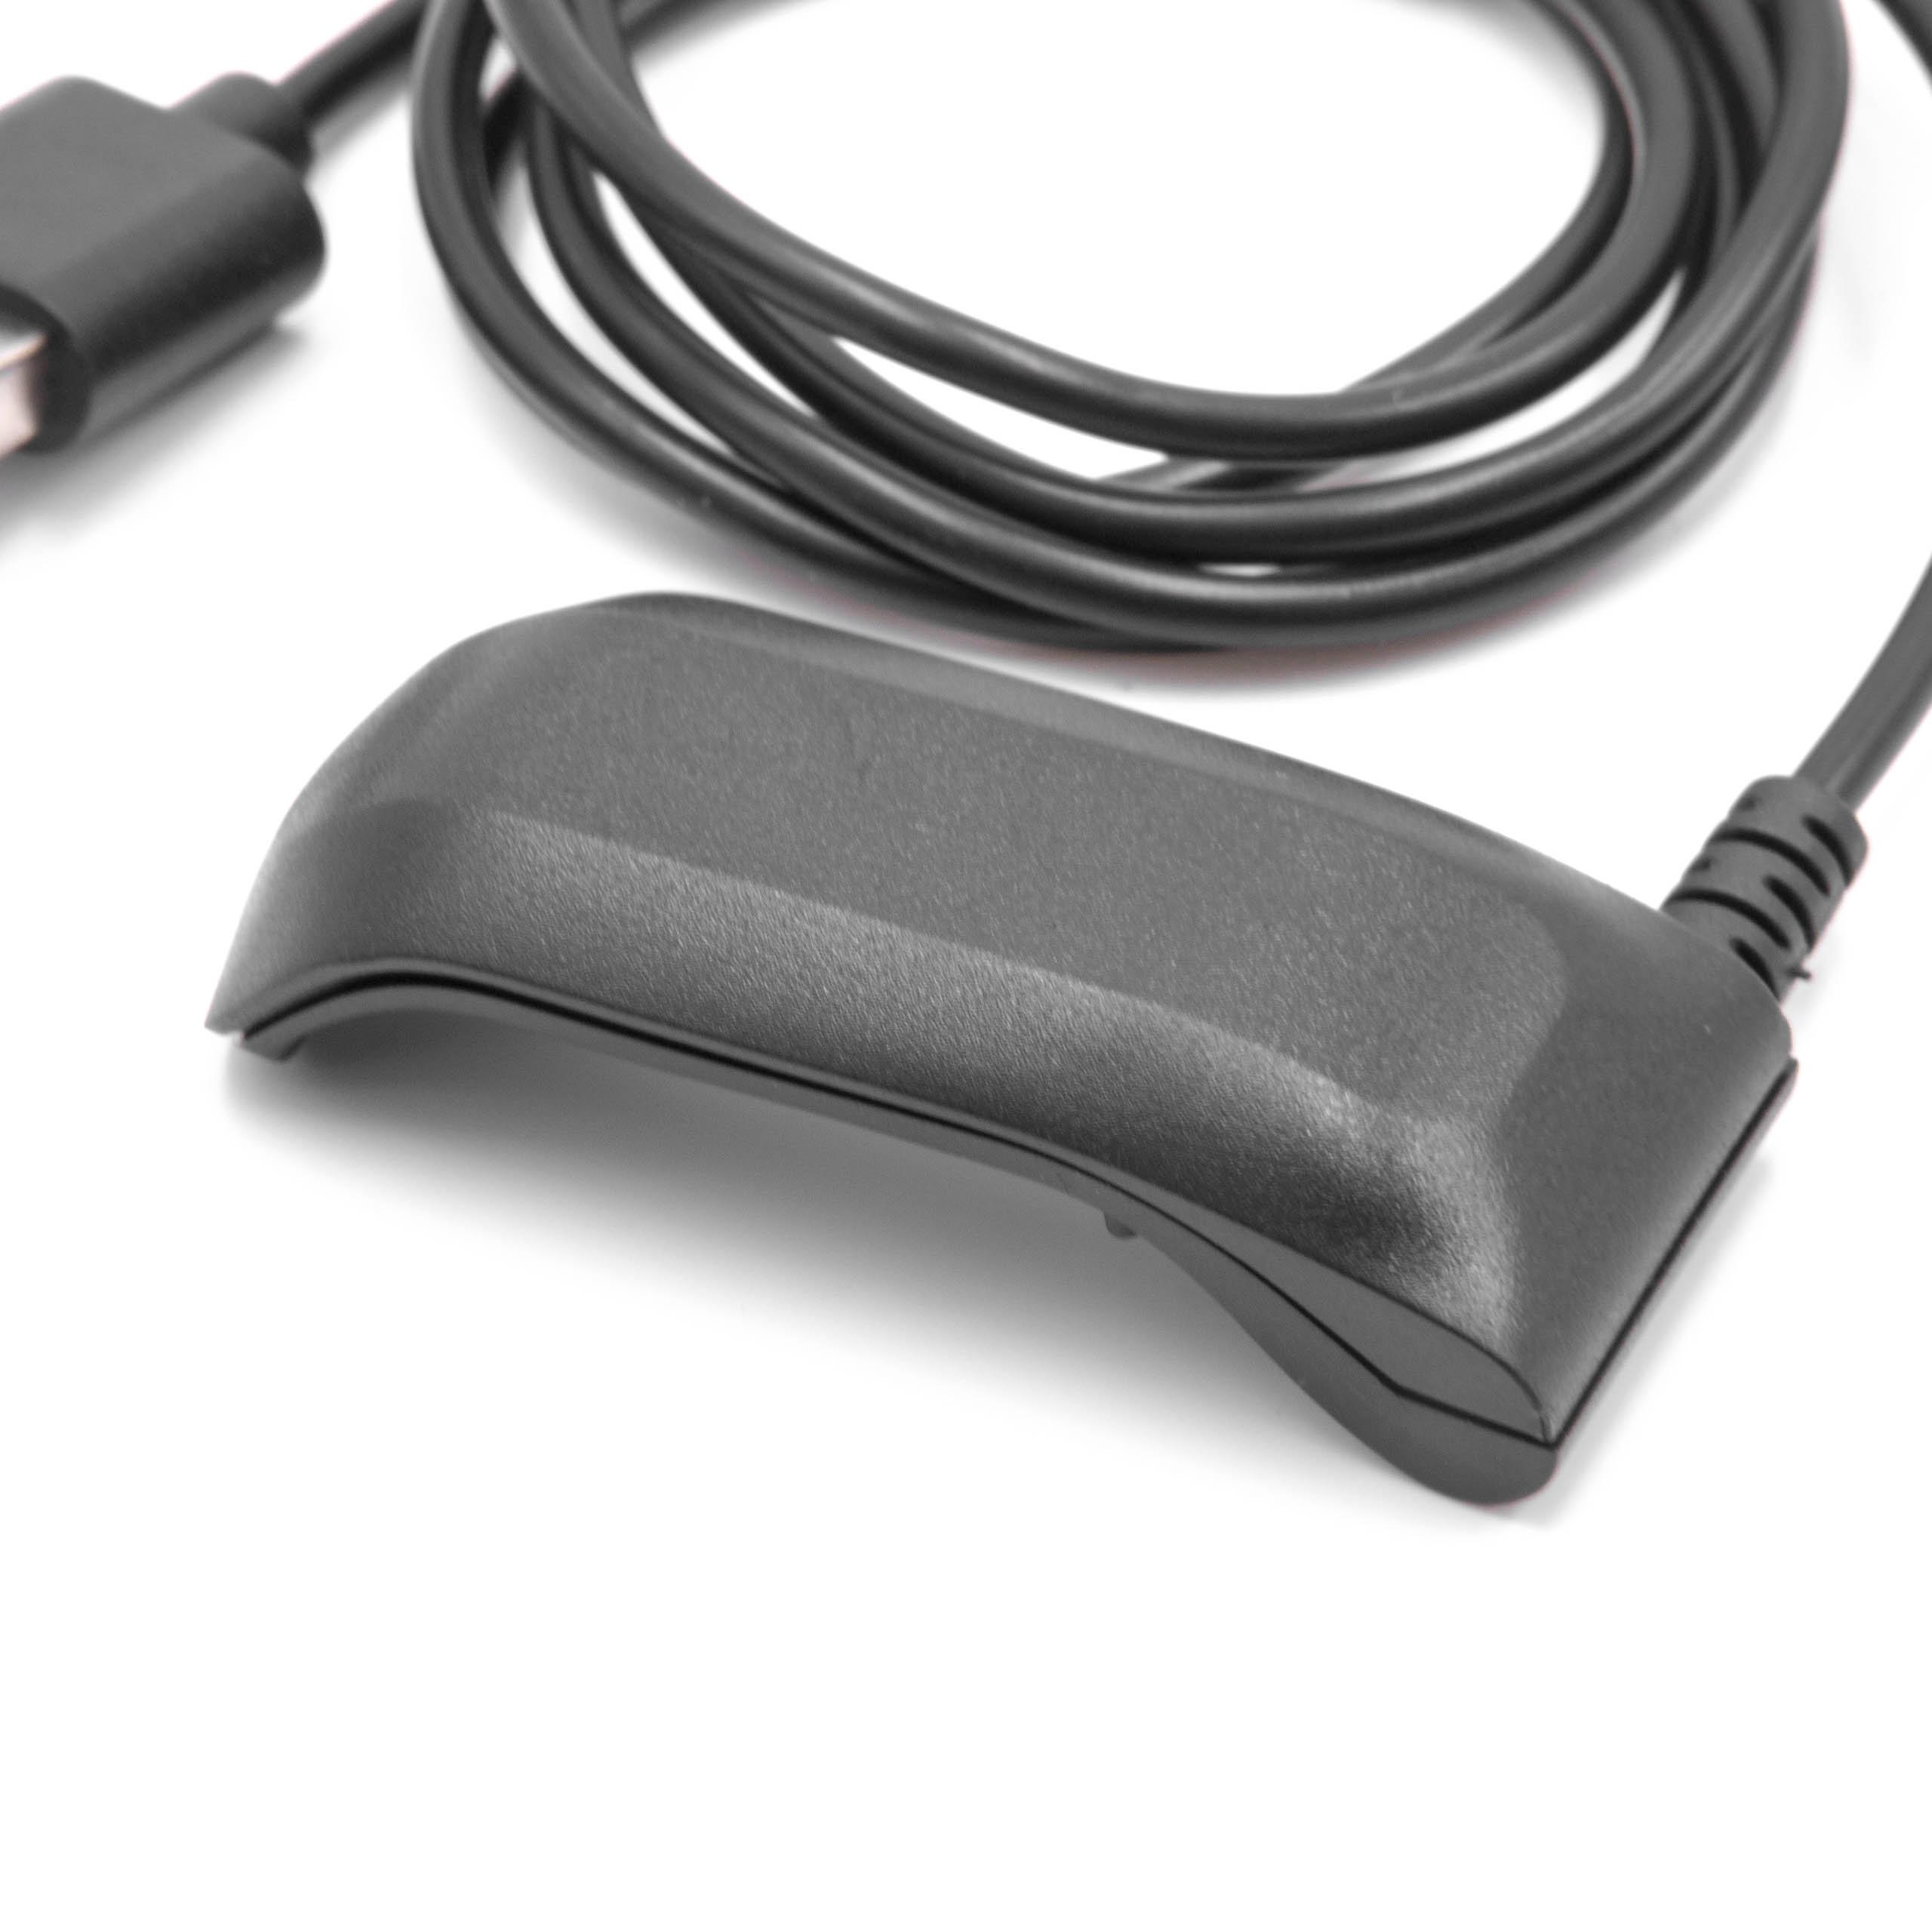 Charging Station suitable for Garmin Forerunner 610 Fitness Tracker - Cable, 100cm, black